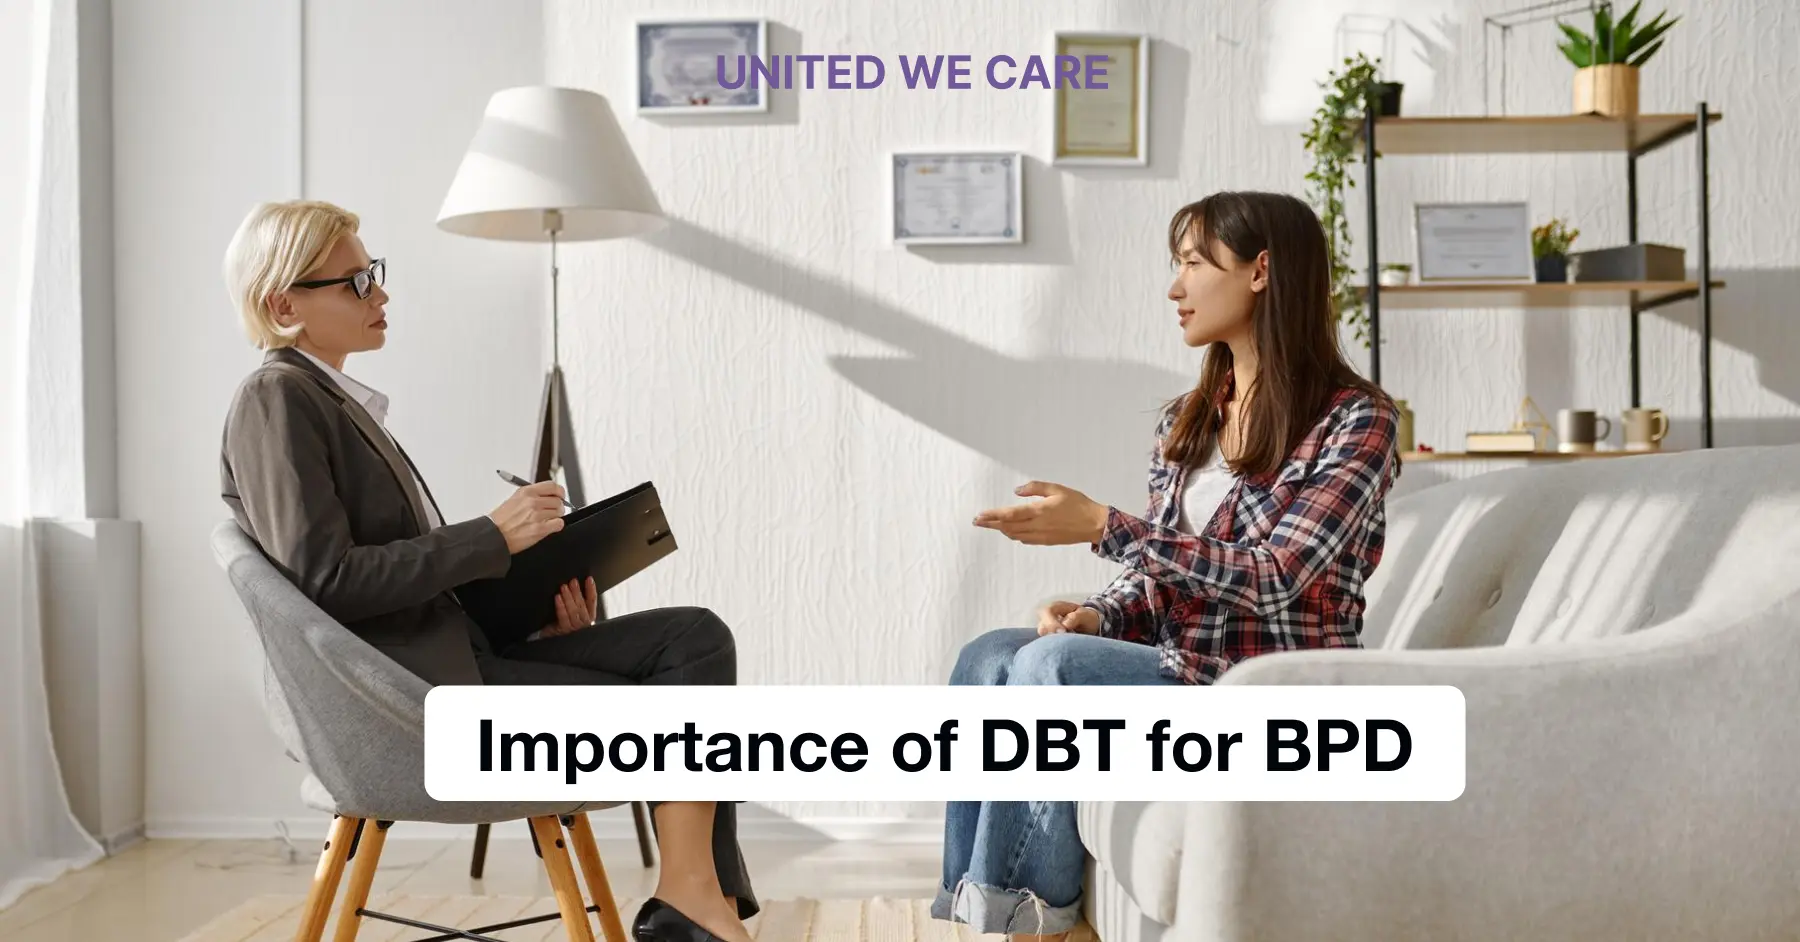 DBT for BPD: 5 Secret Reasons Why DBT Helps BPD Patients Thrive